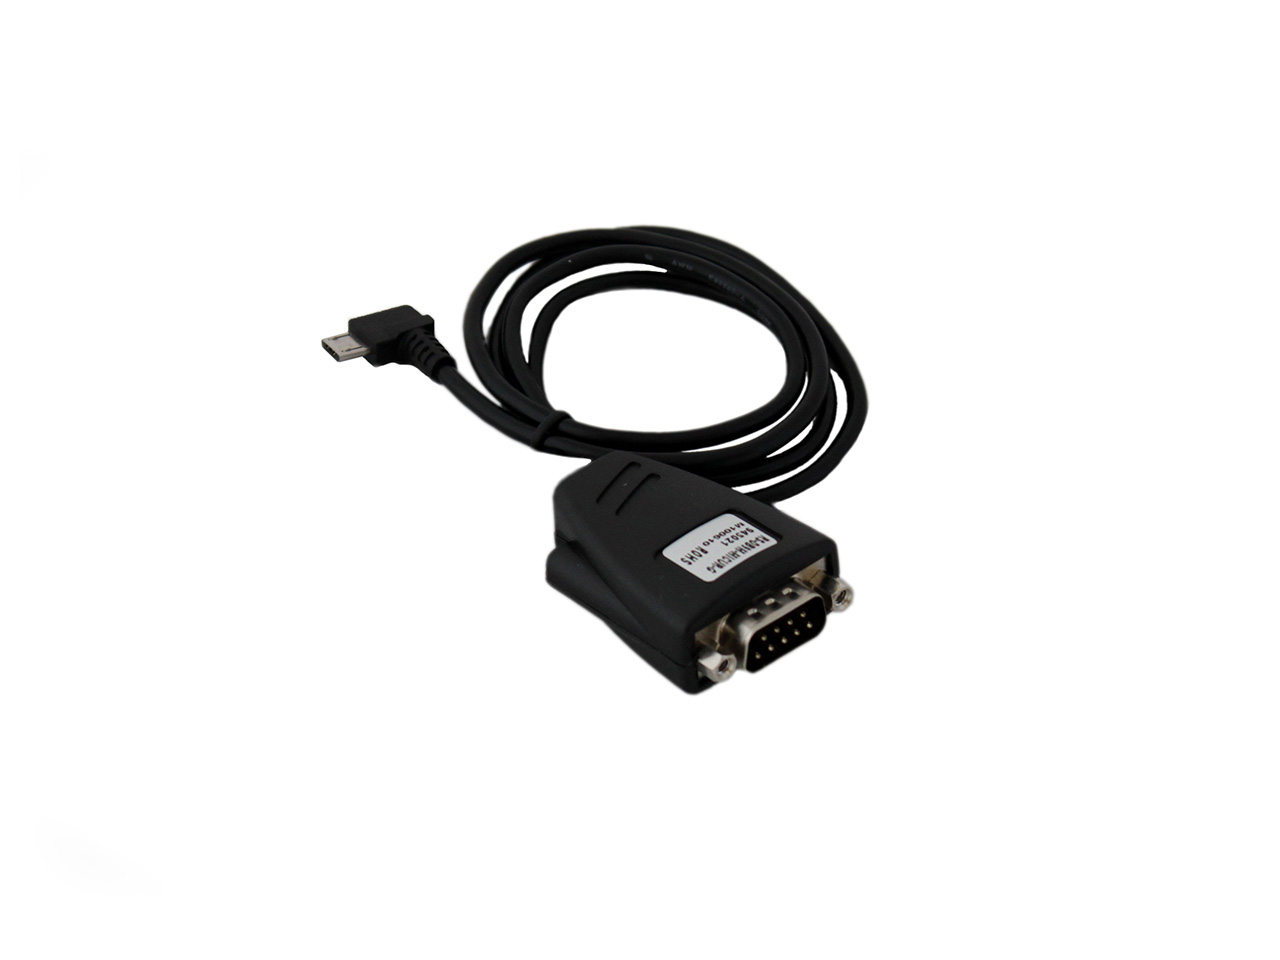 NX3-1052 USB cable.jpg